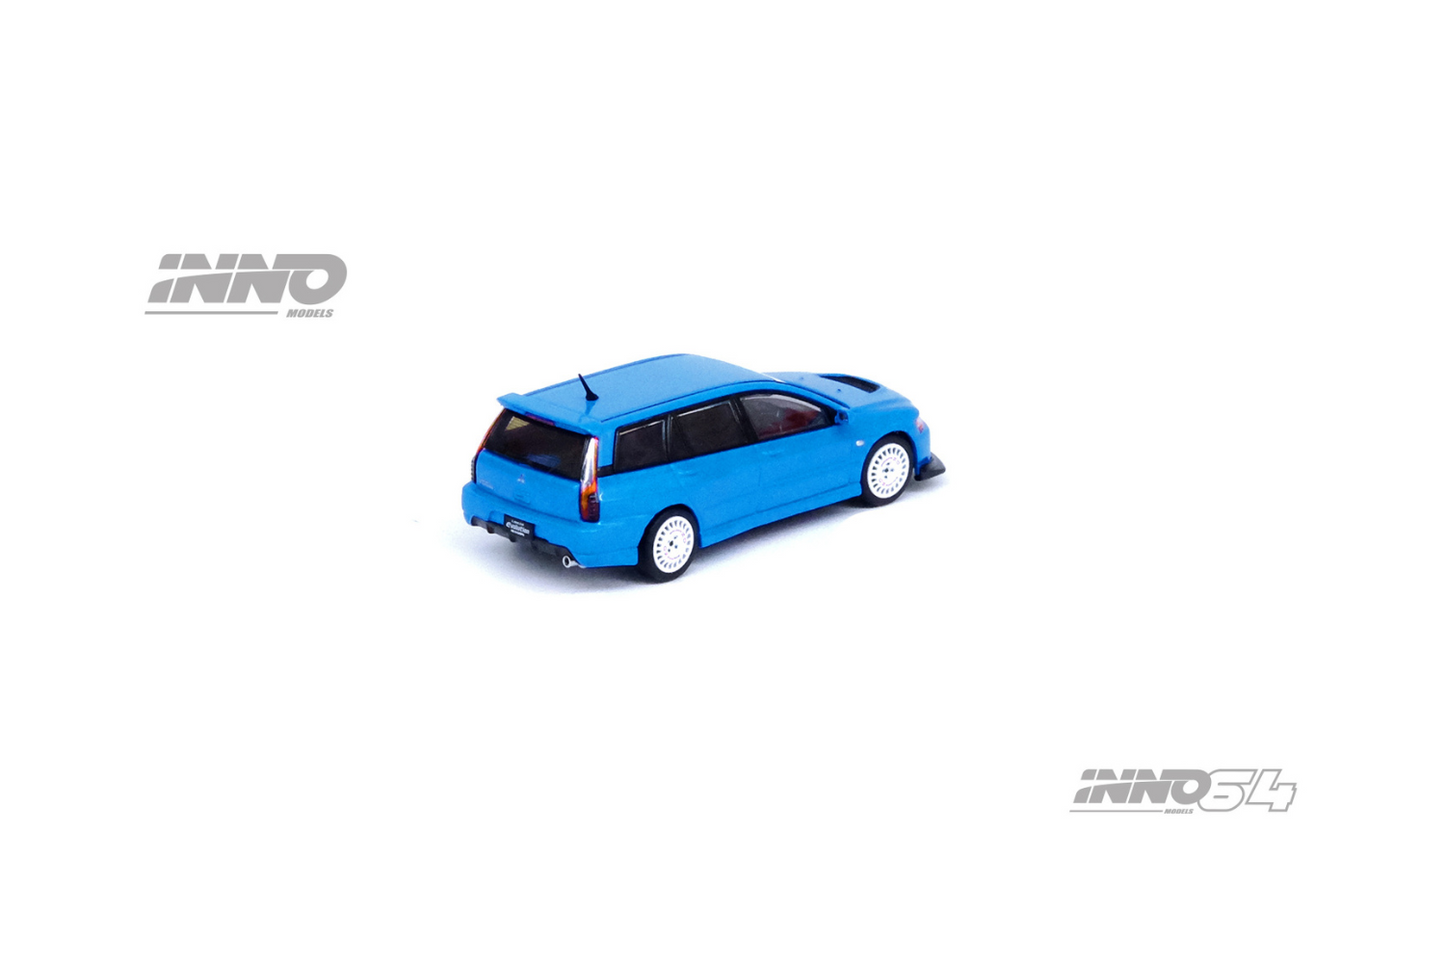 Inno64 Mitsubishi Lancer Evolution IX Wagon in Blue